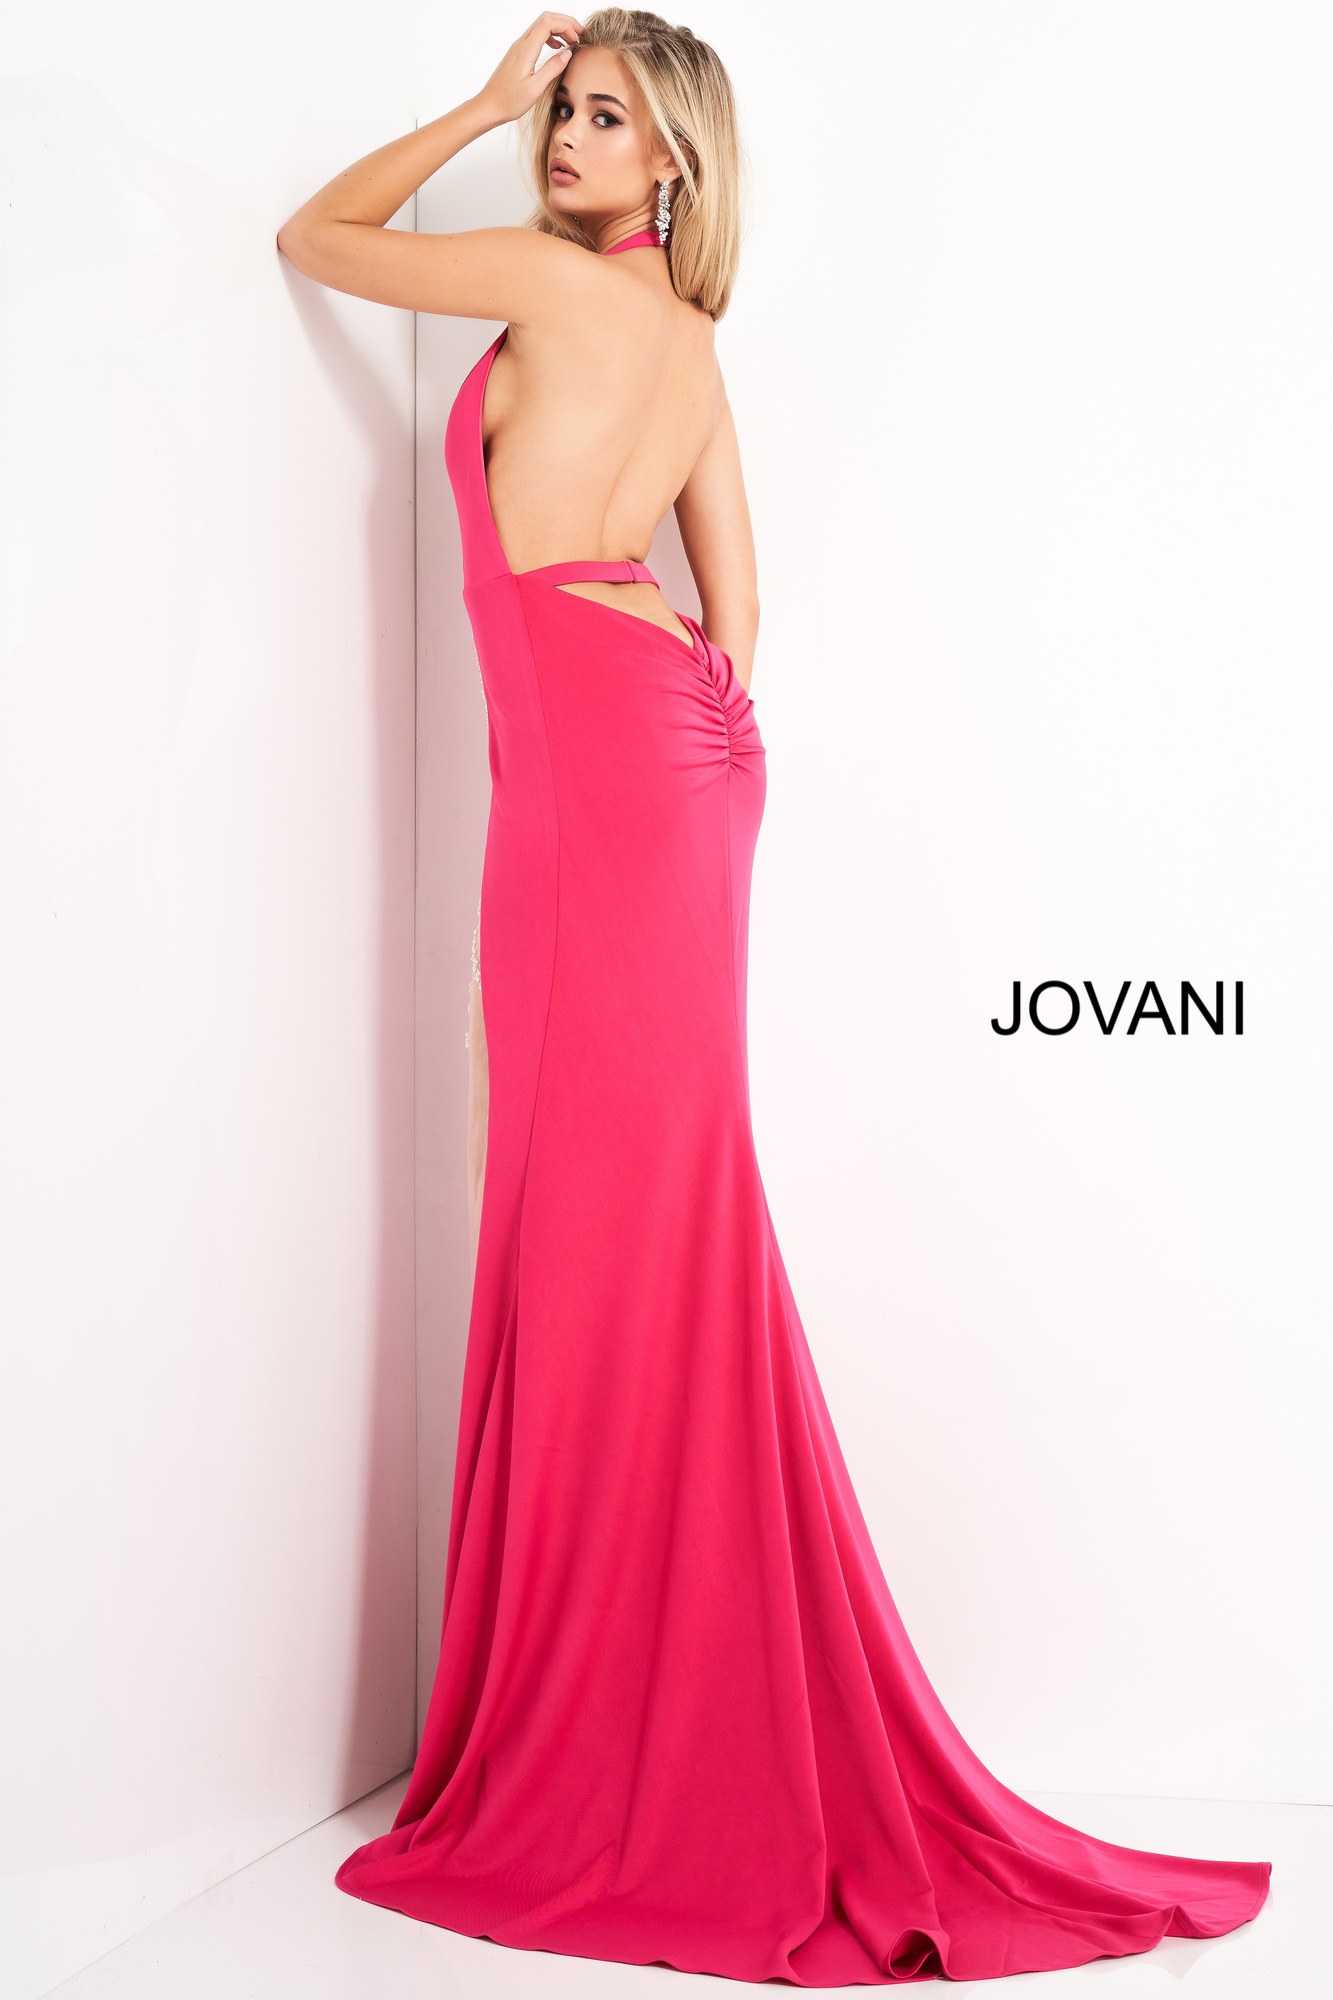 Jovani 02086 Hot Pink Halter Neck Backless Prom Dress | Free Hot Nude ...